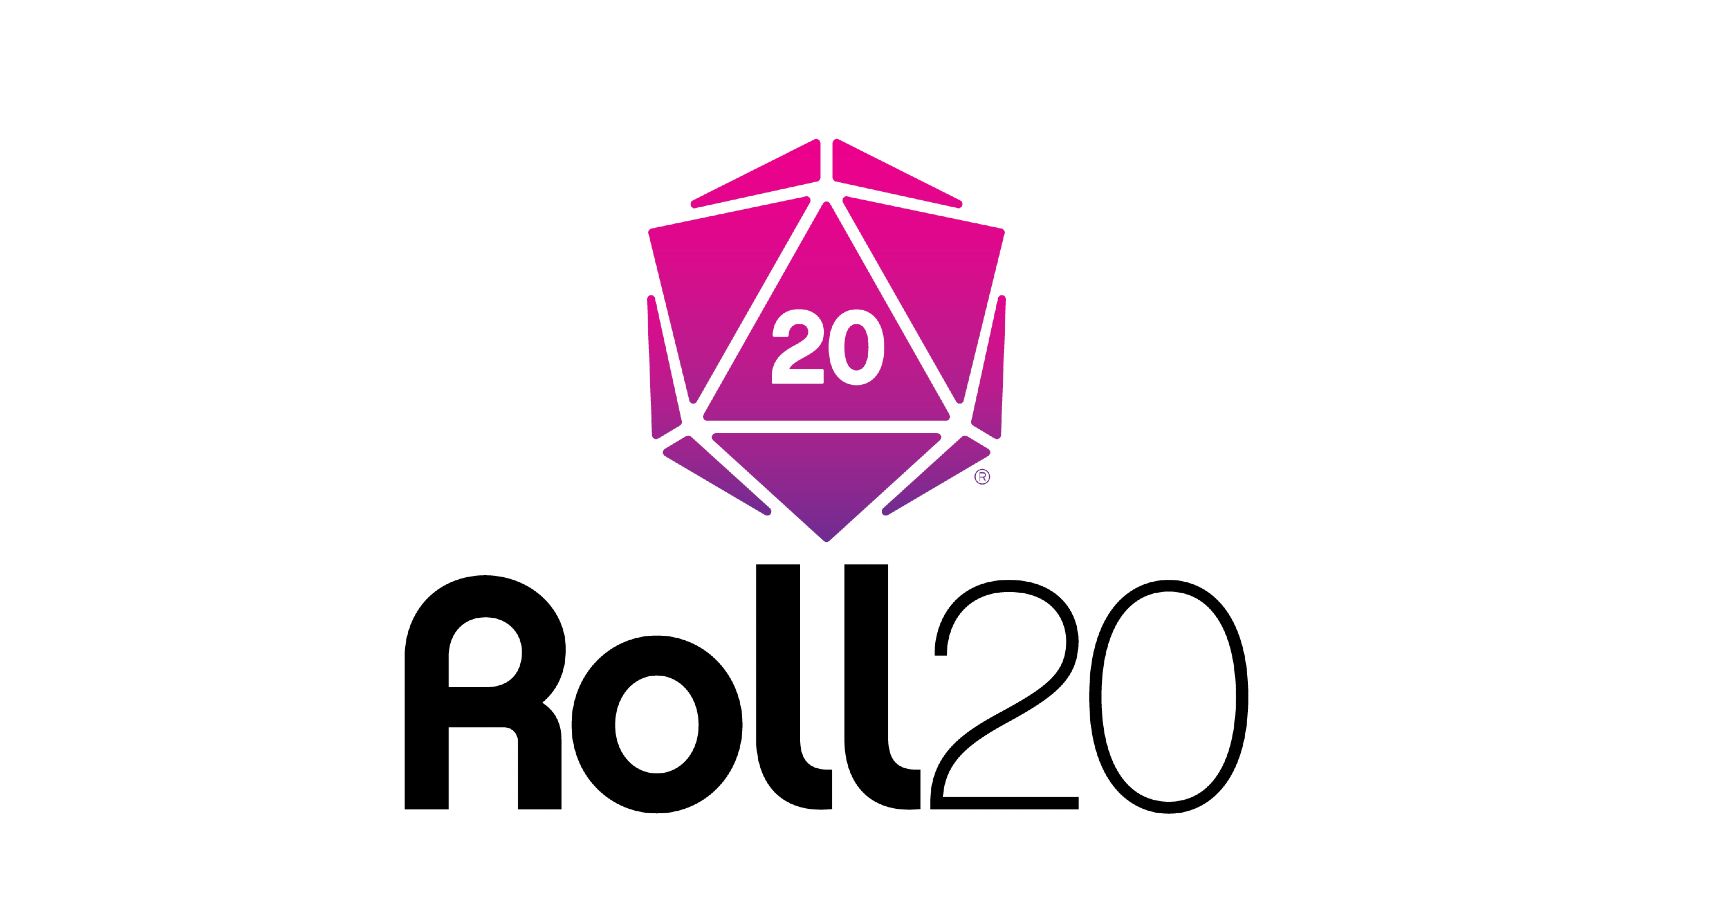 Popular D&D Platform Roll20 Celebrates 5 Million Users With A Big Upgrade